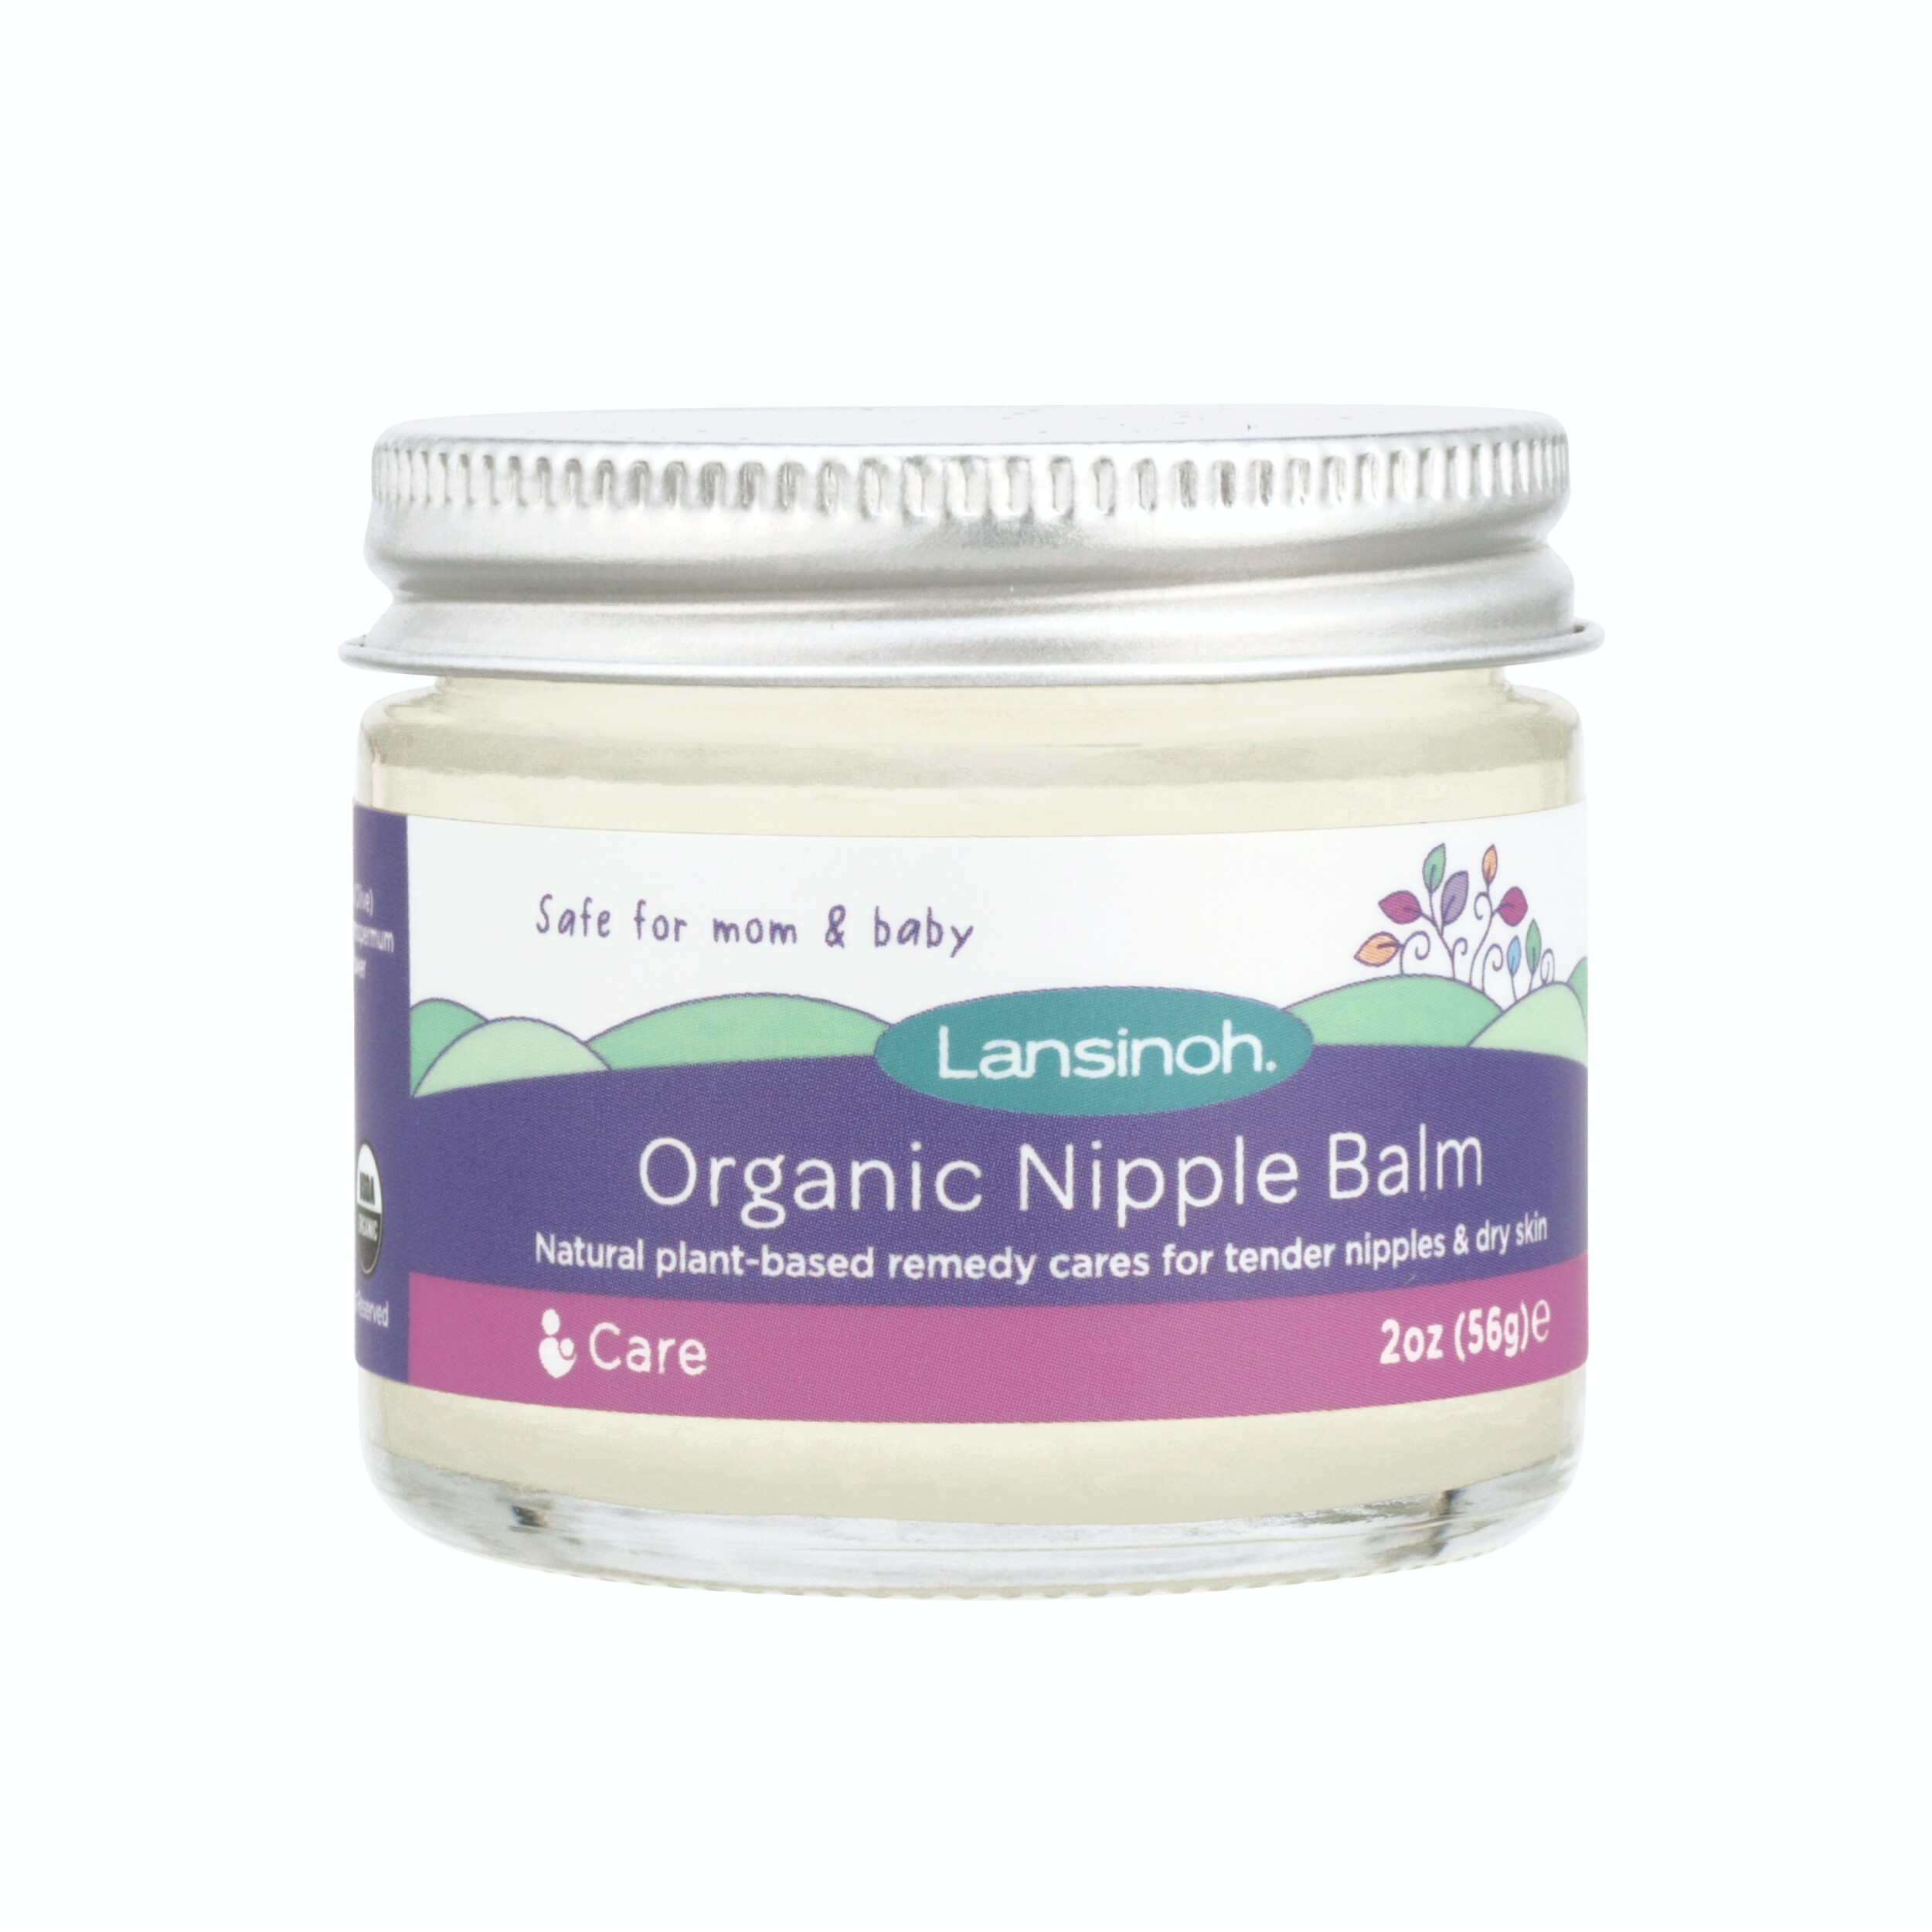 2x Lansinoh Organic Nipple Balm For Tender Nipples & Dry Skin Plant Based  7/2024